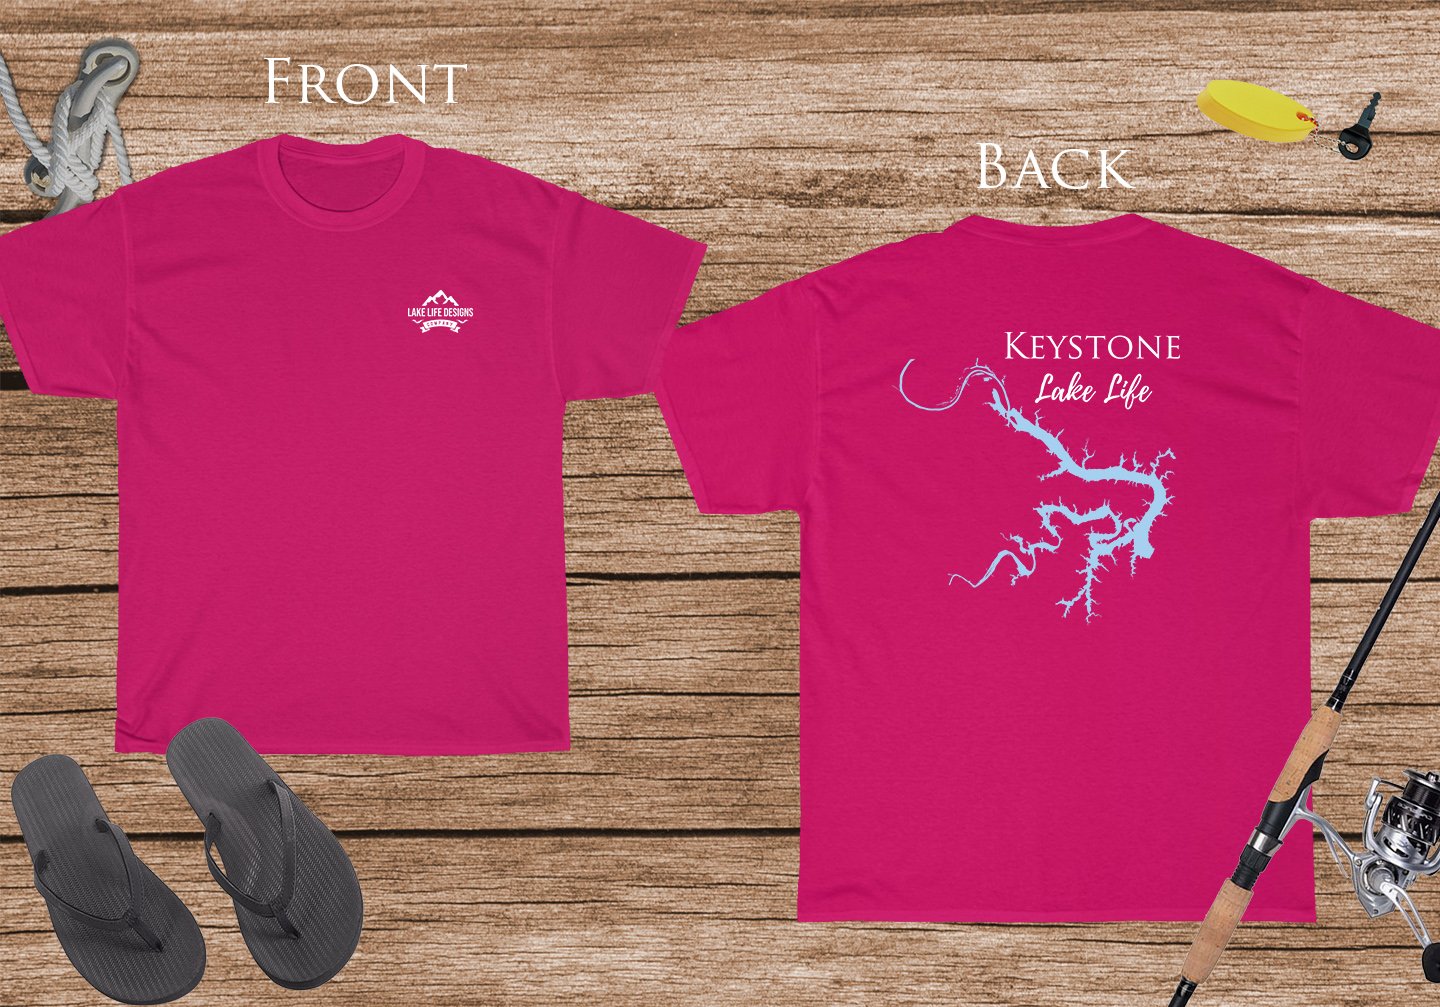 Keystone Lake Life - Cotton Short Sleeved - FRONT & BACK PRINTED - Short Sleeved Cotton Tee - Oklahoma Lake